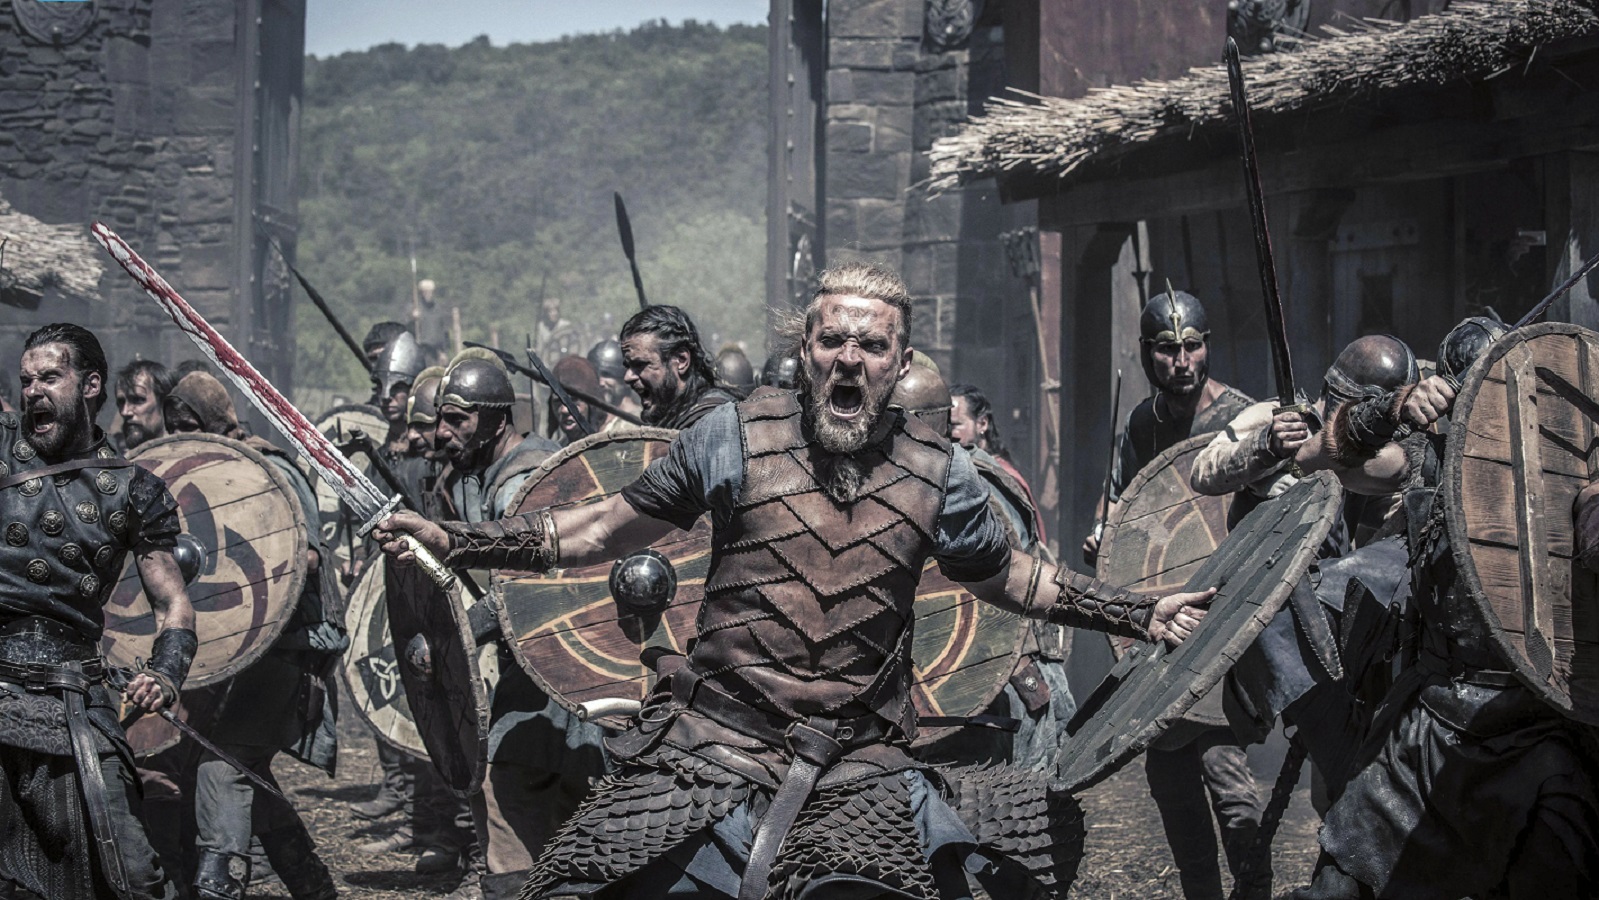 People 1599x900 The Last Kingdom TV series BBC vikings Ragnar Ragnarsson battle men sword blood screaming